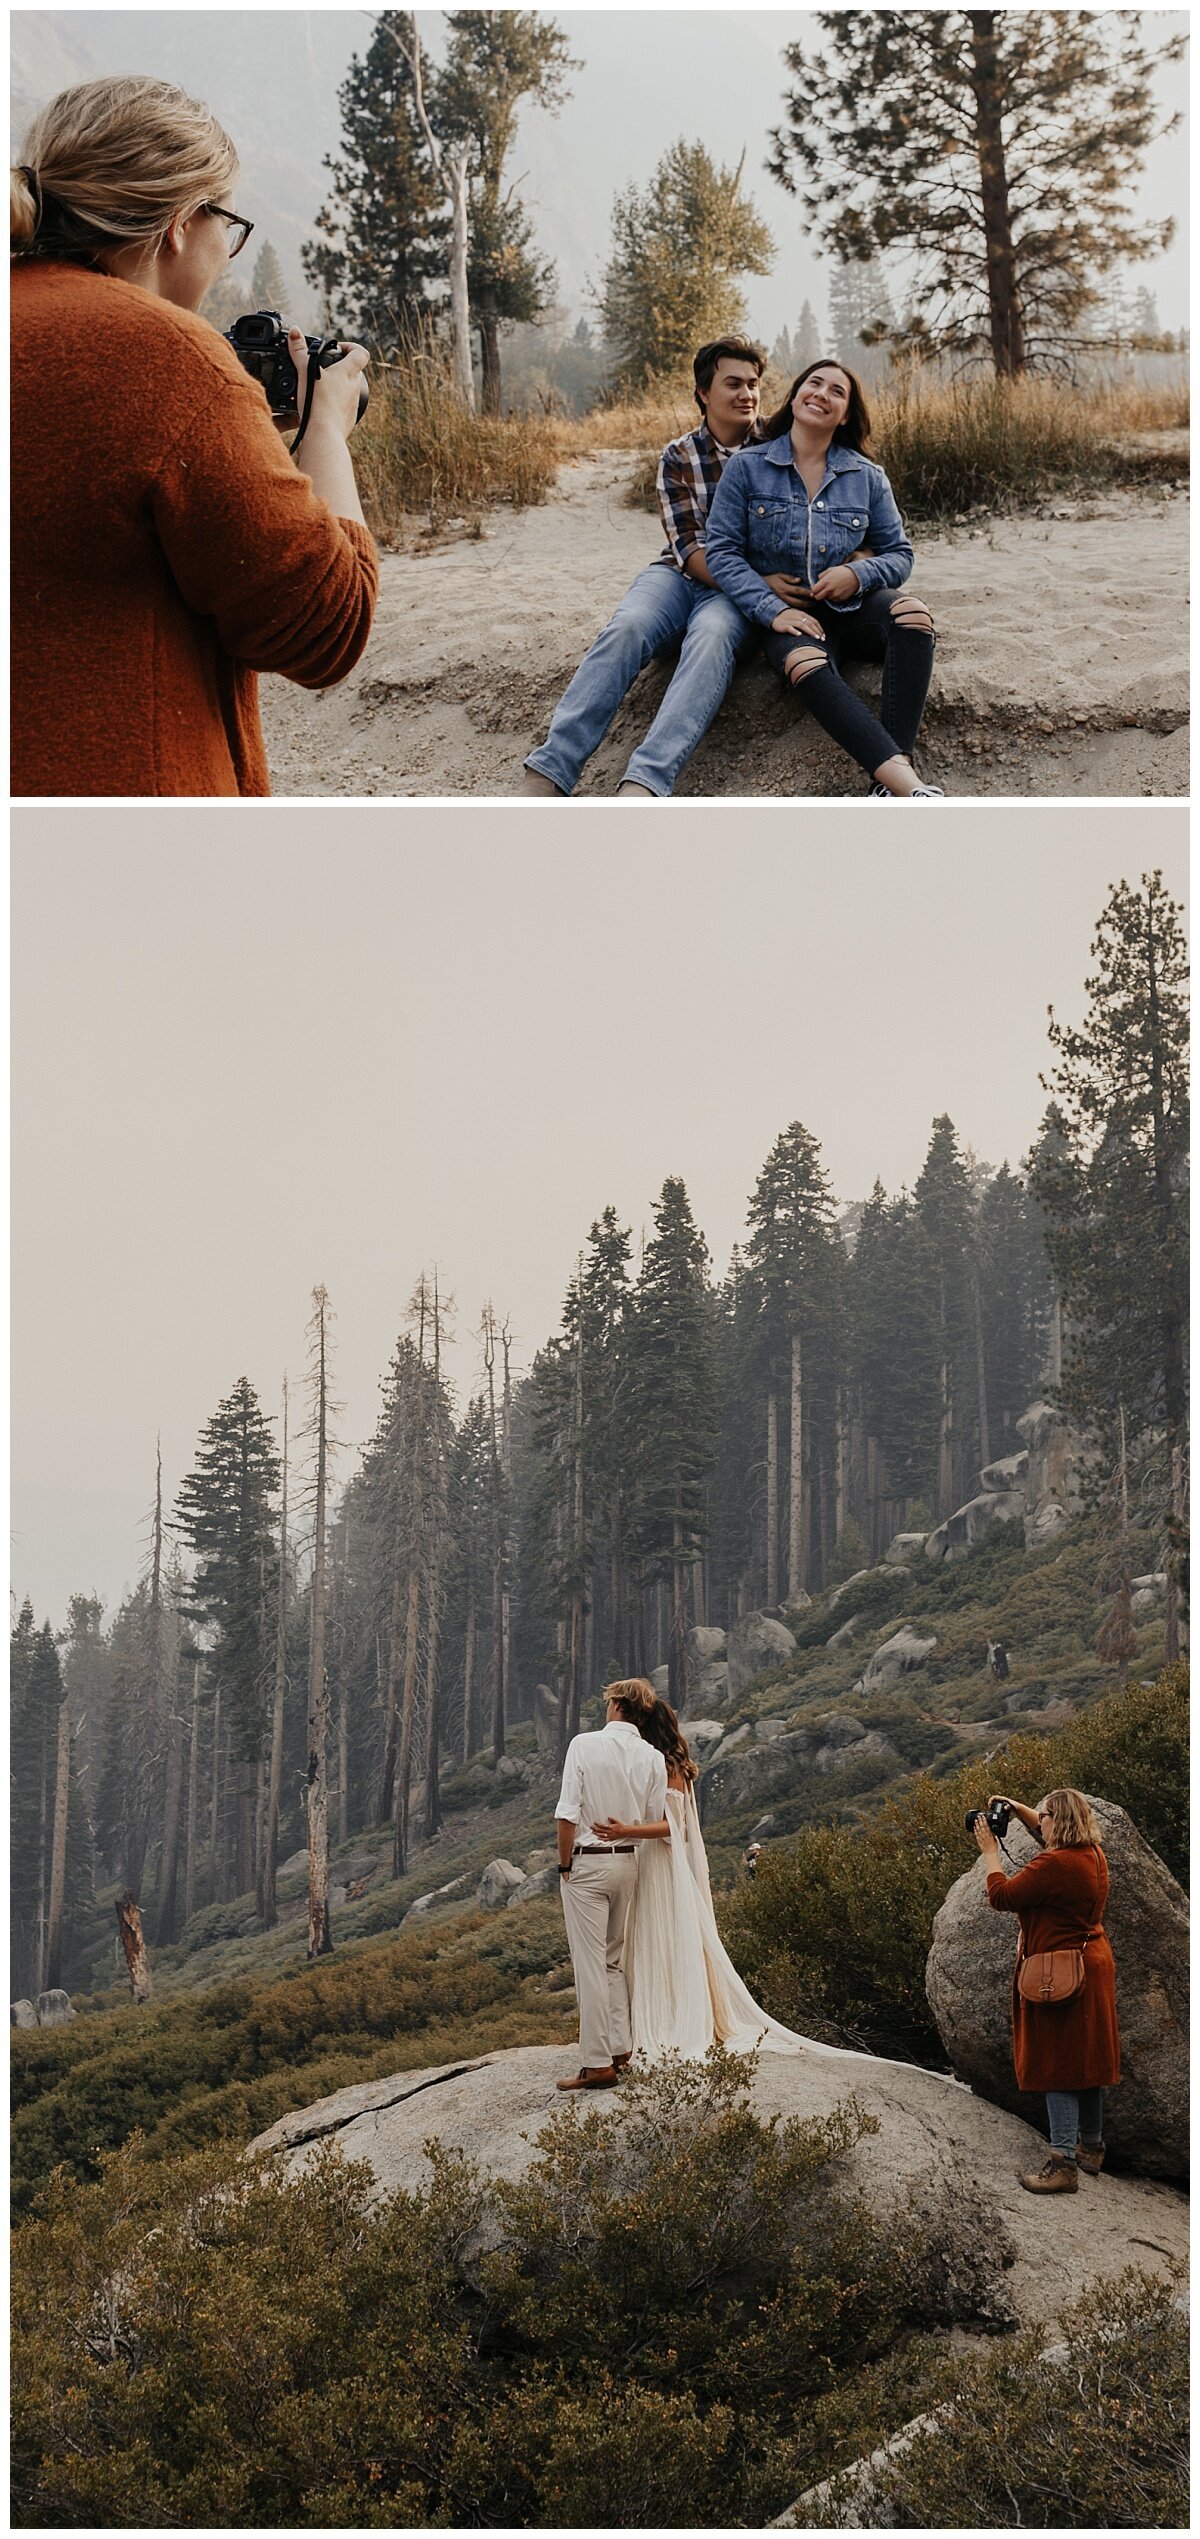 yosemite+travel+_+kansas+city+wedding+photographer+_+Yosemite+Elopement+_+Travel+blog+_+yosemite+photos (13).jpeg